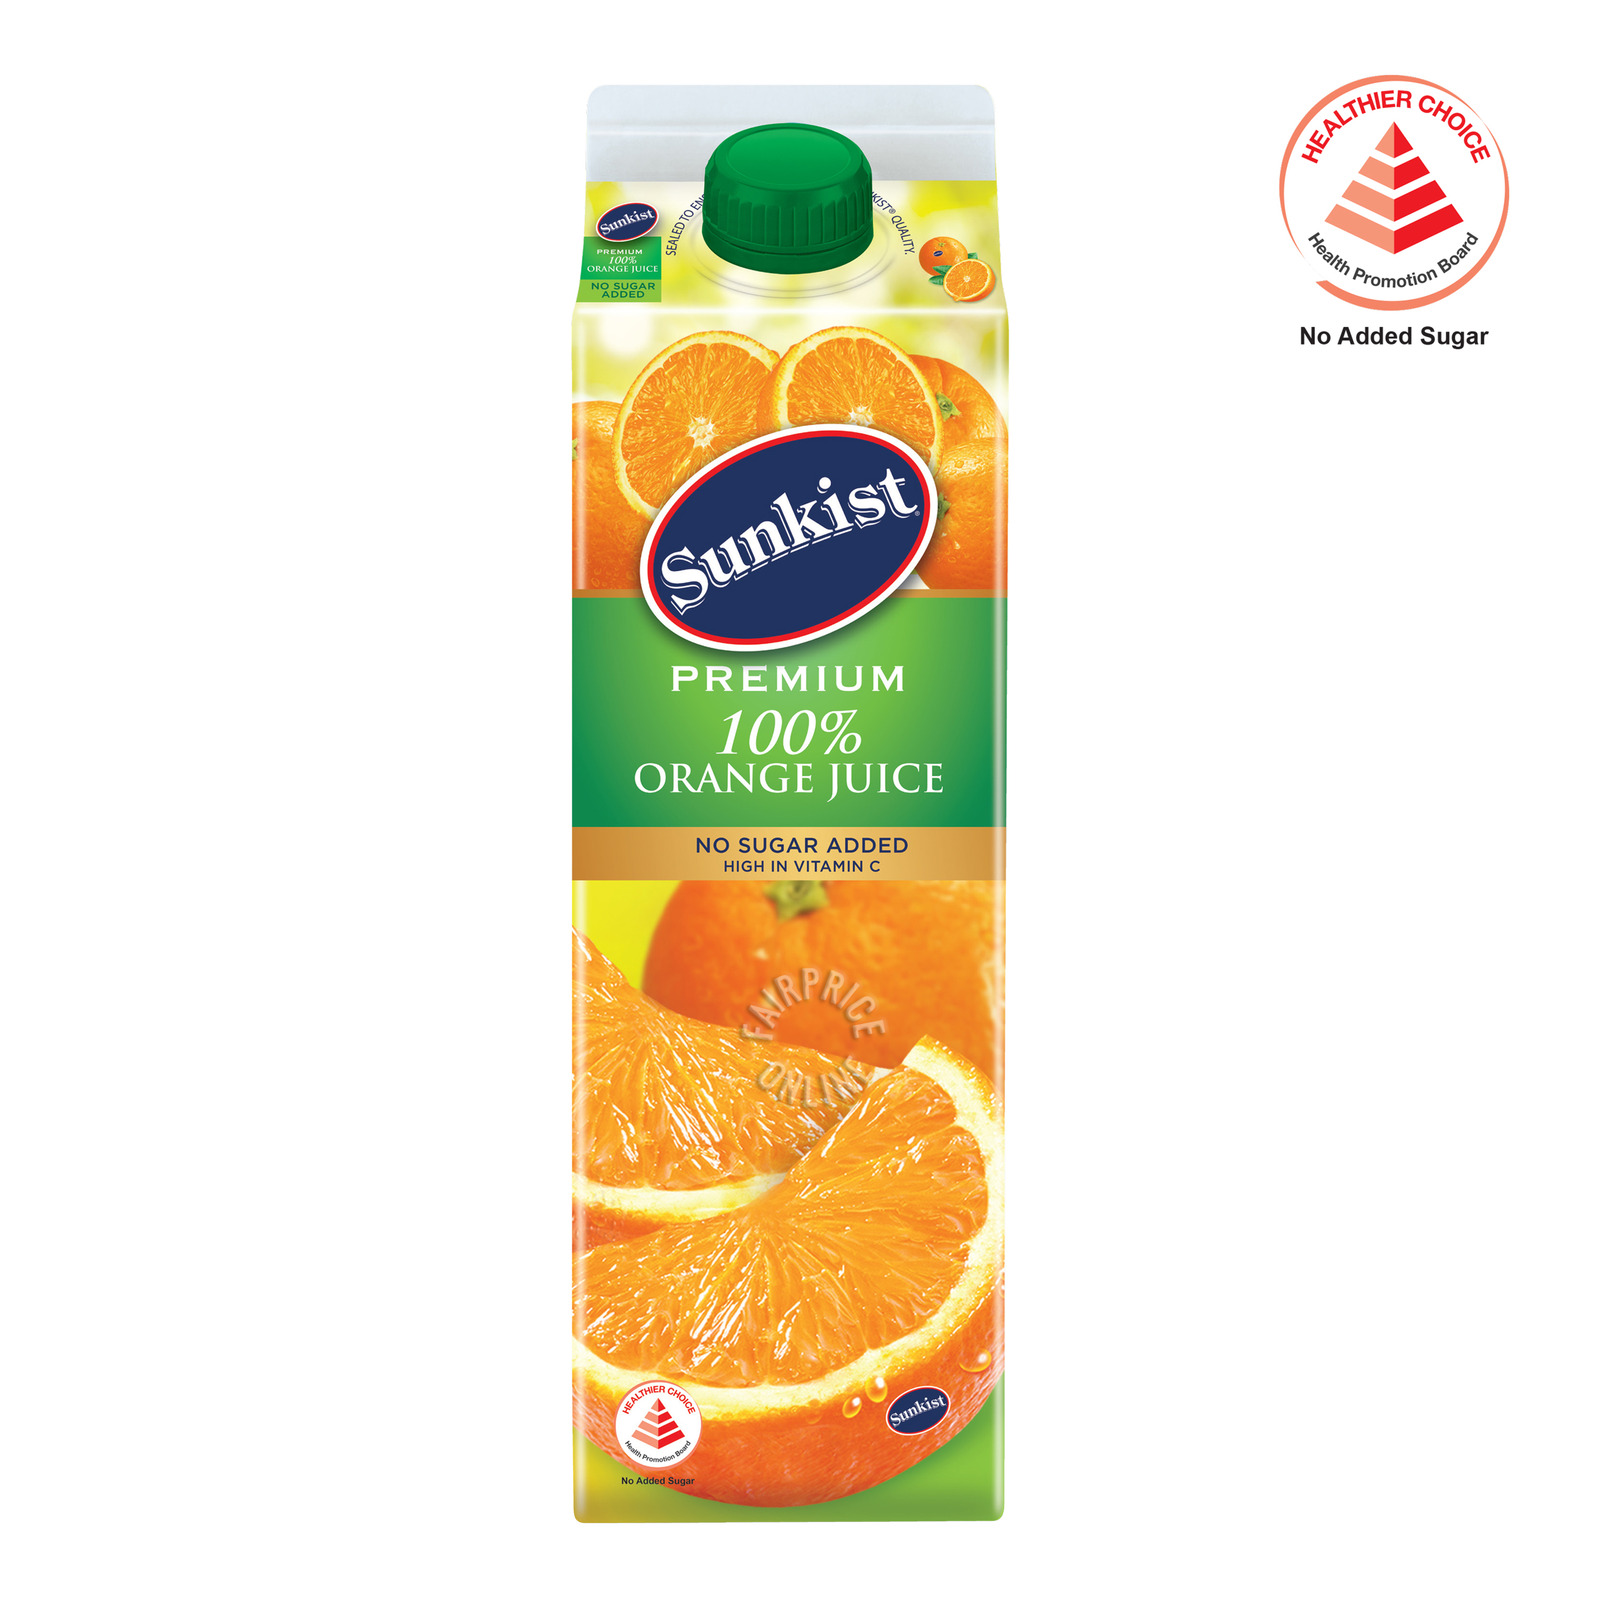 Sunkist Premium 100% Orange Juice (No Sugar Added)